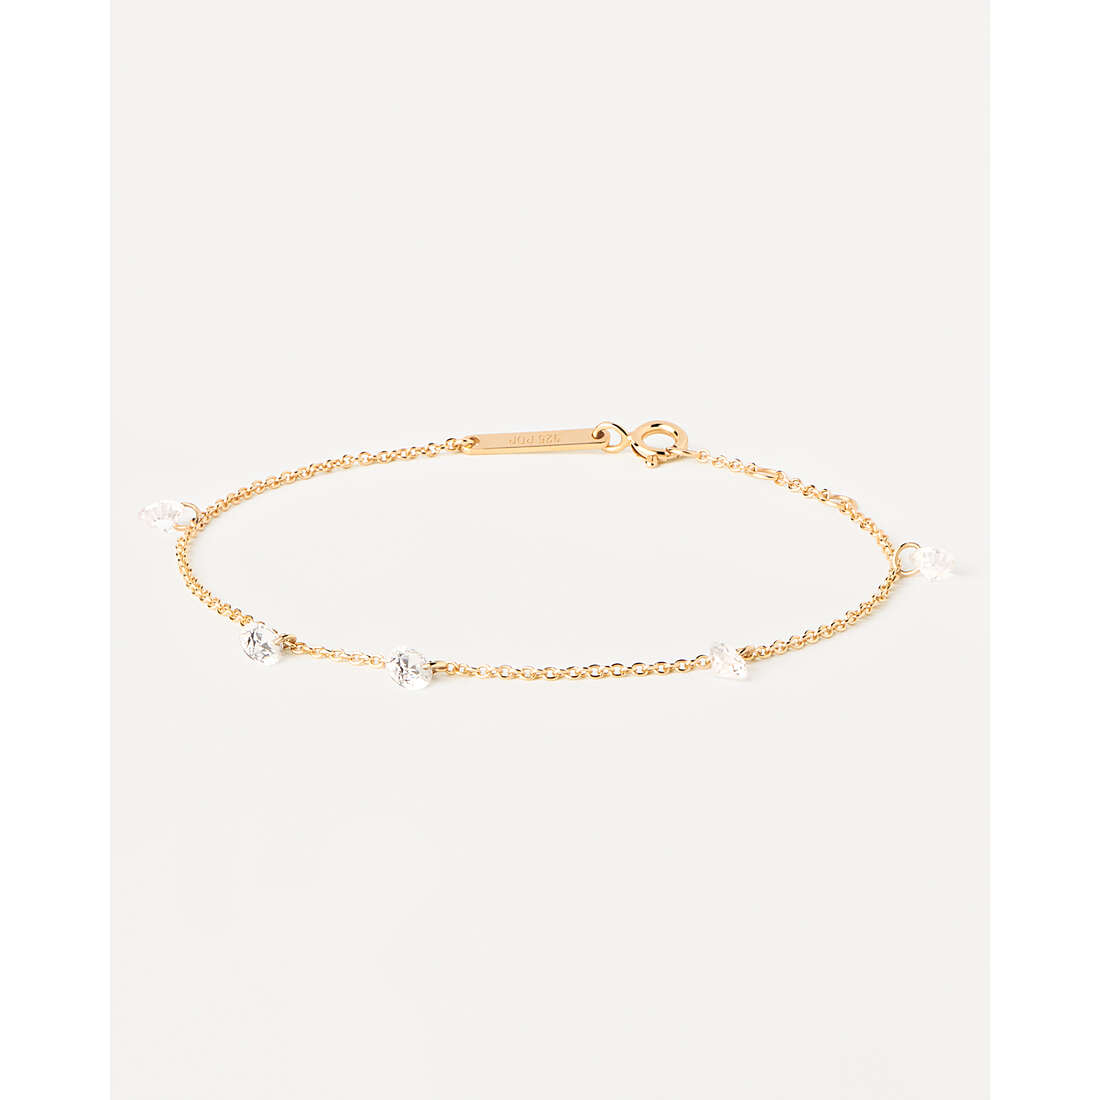 bracelet femme bijoux PDPaola PU01-594-U